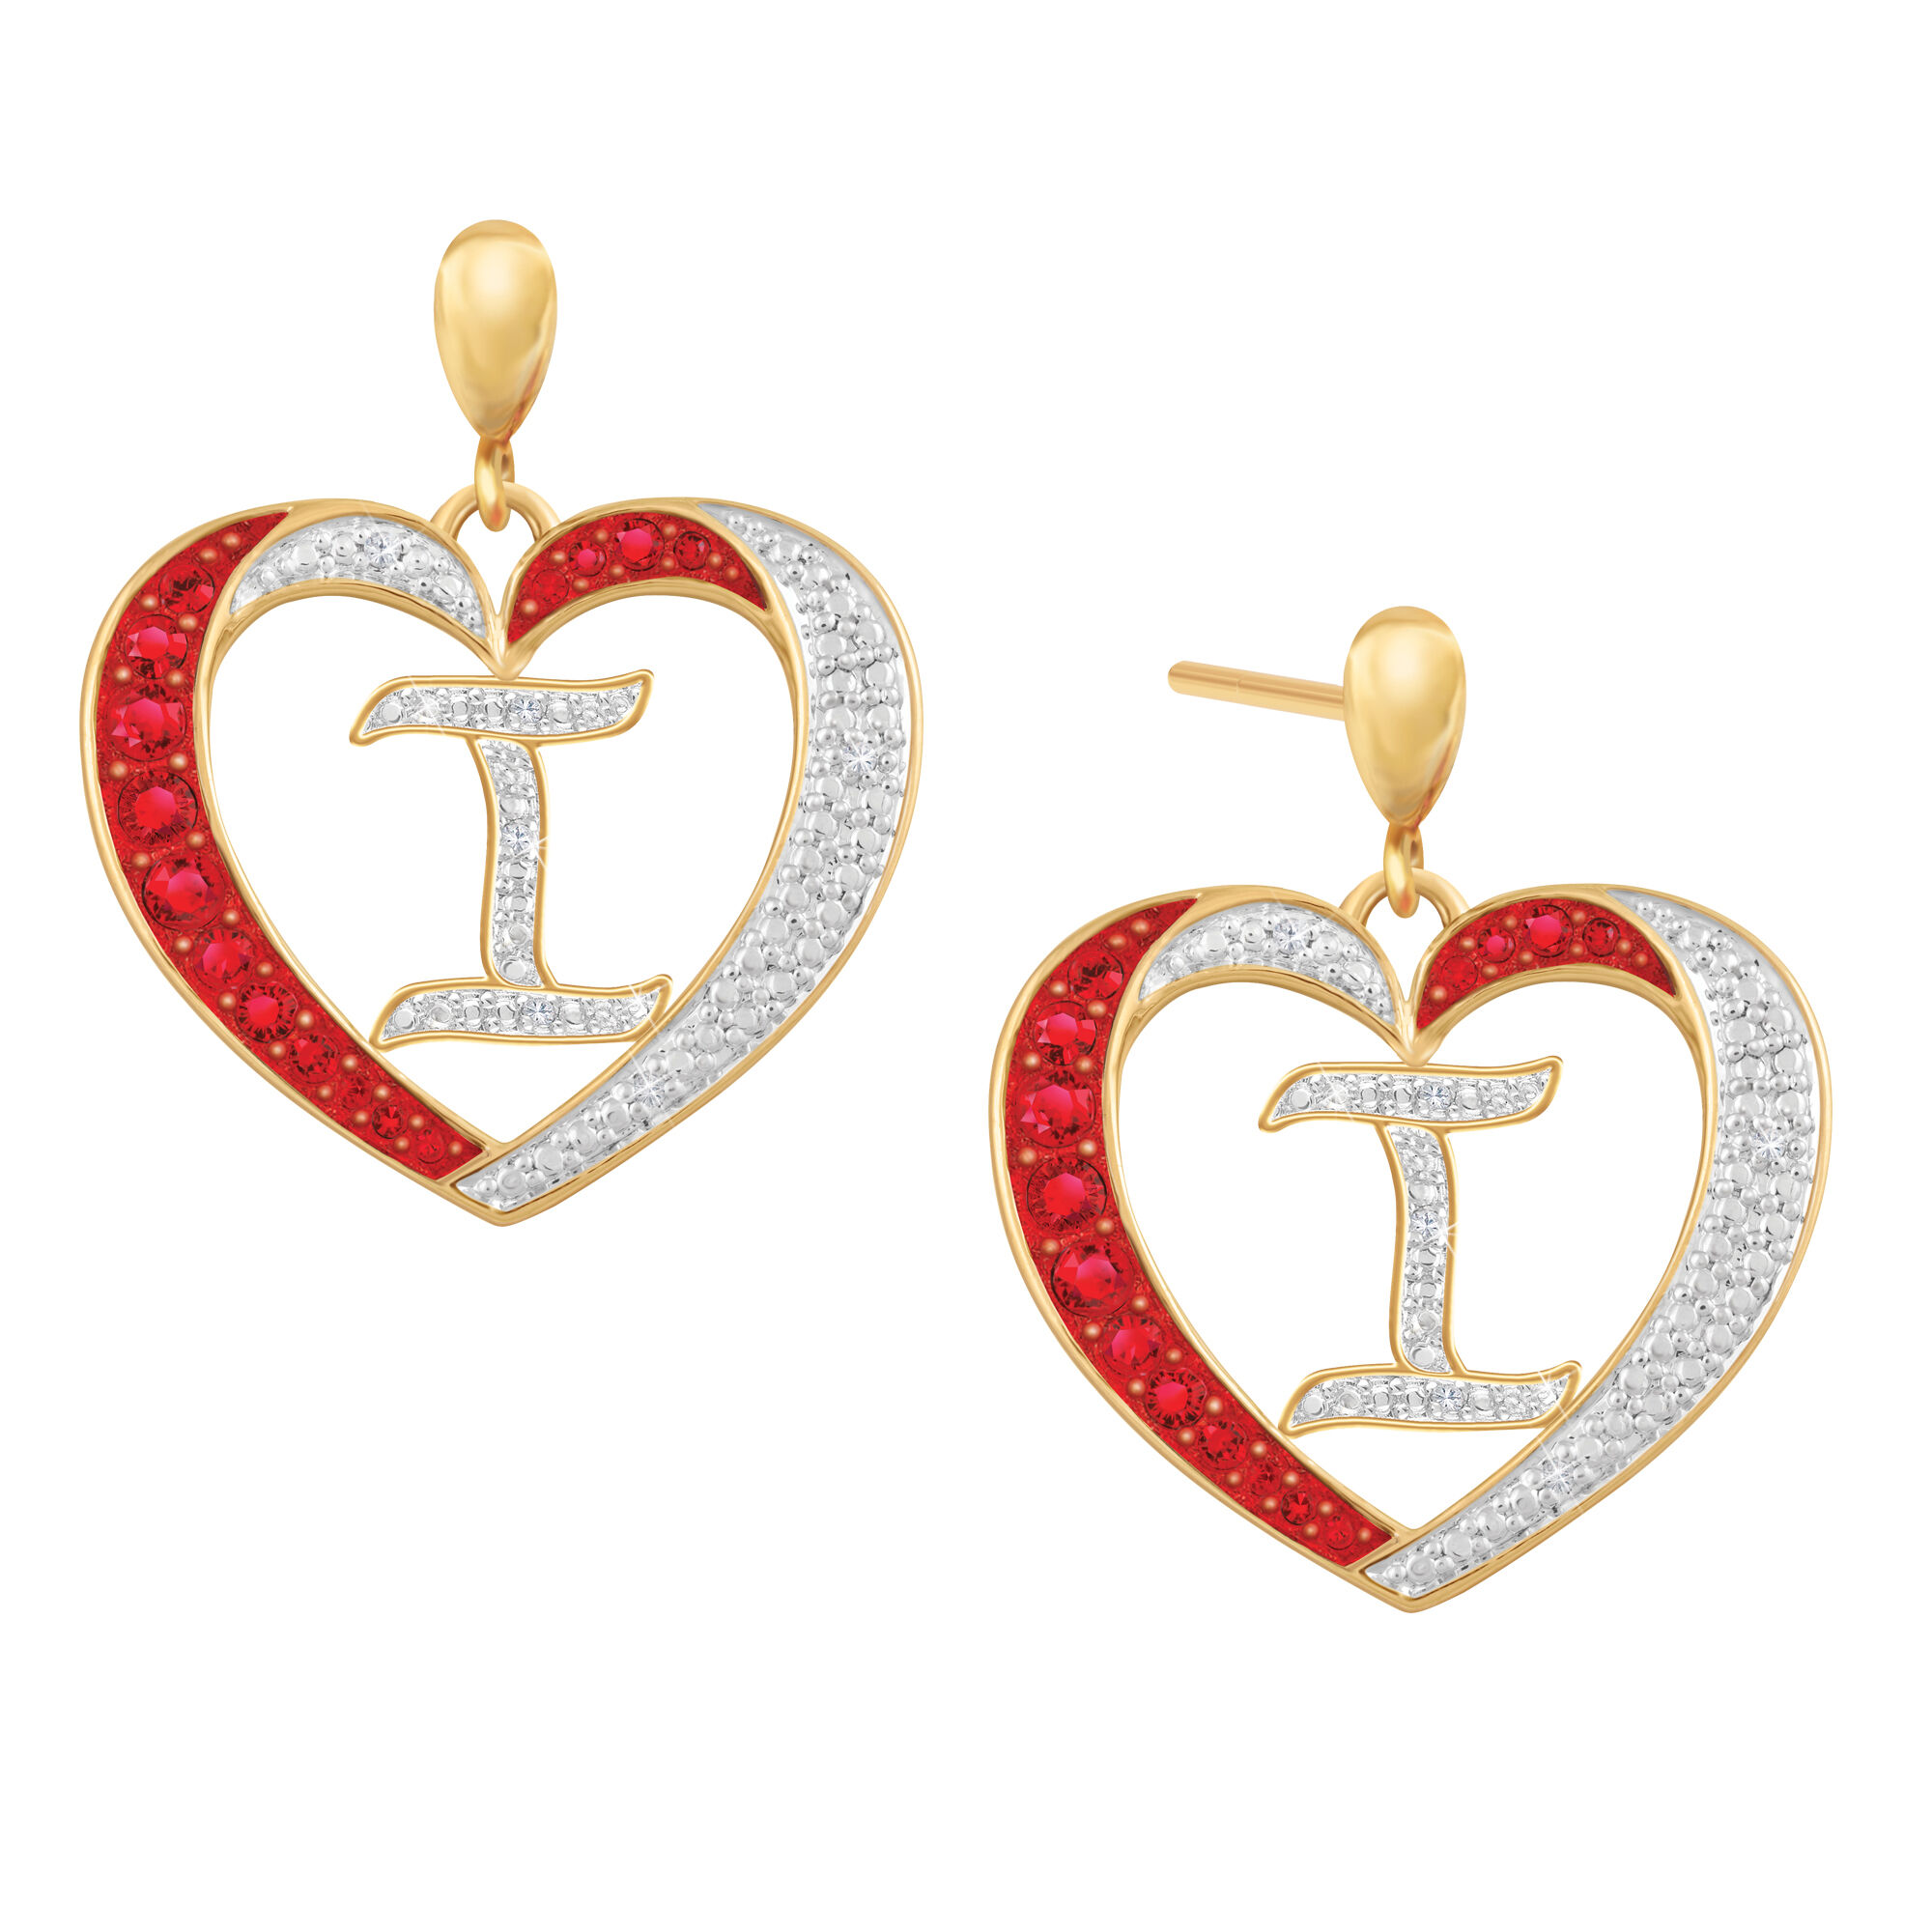 Diamond Initial Heart Earrings 2300 0094 i initial